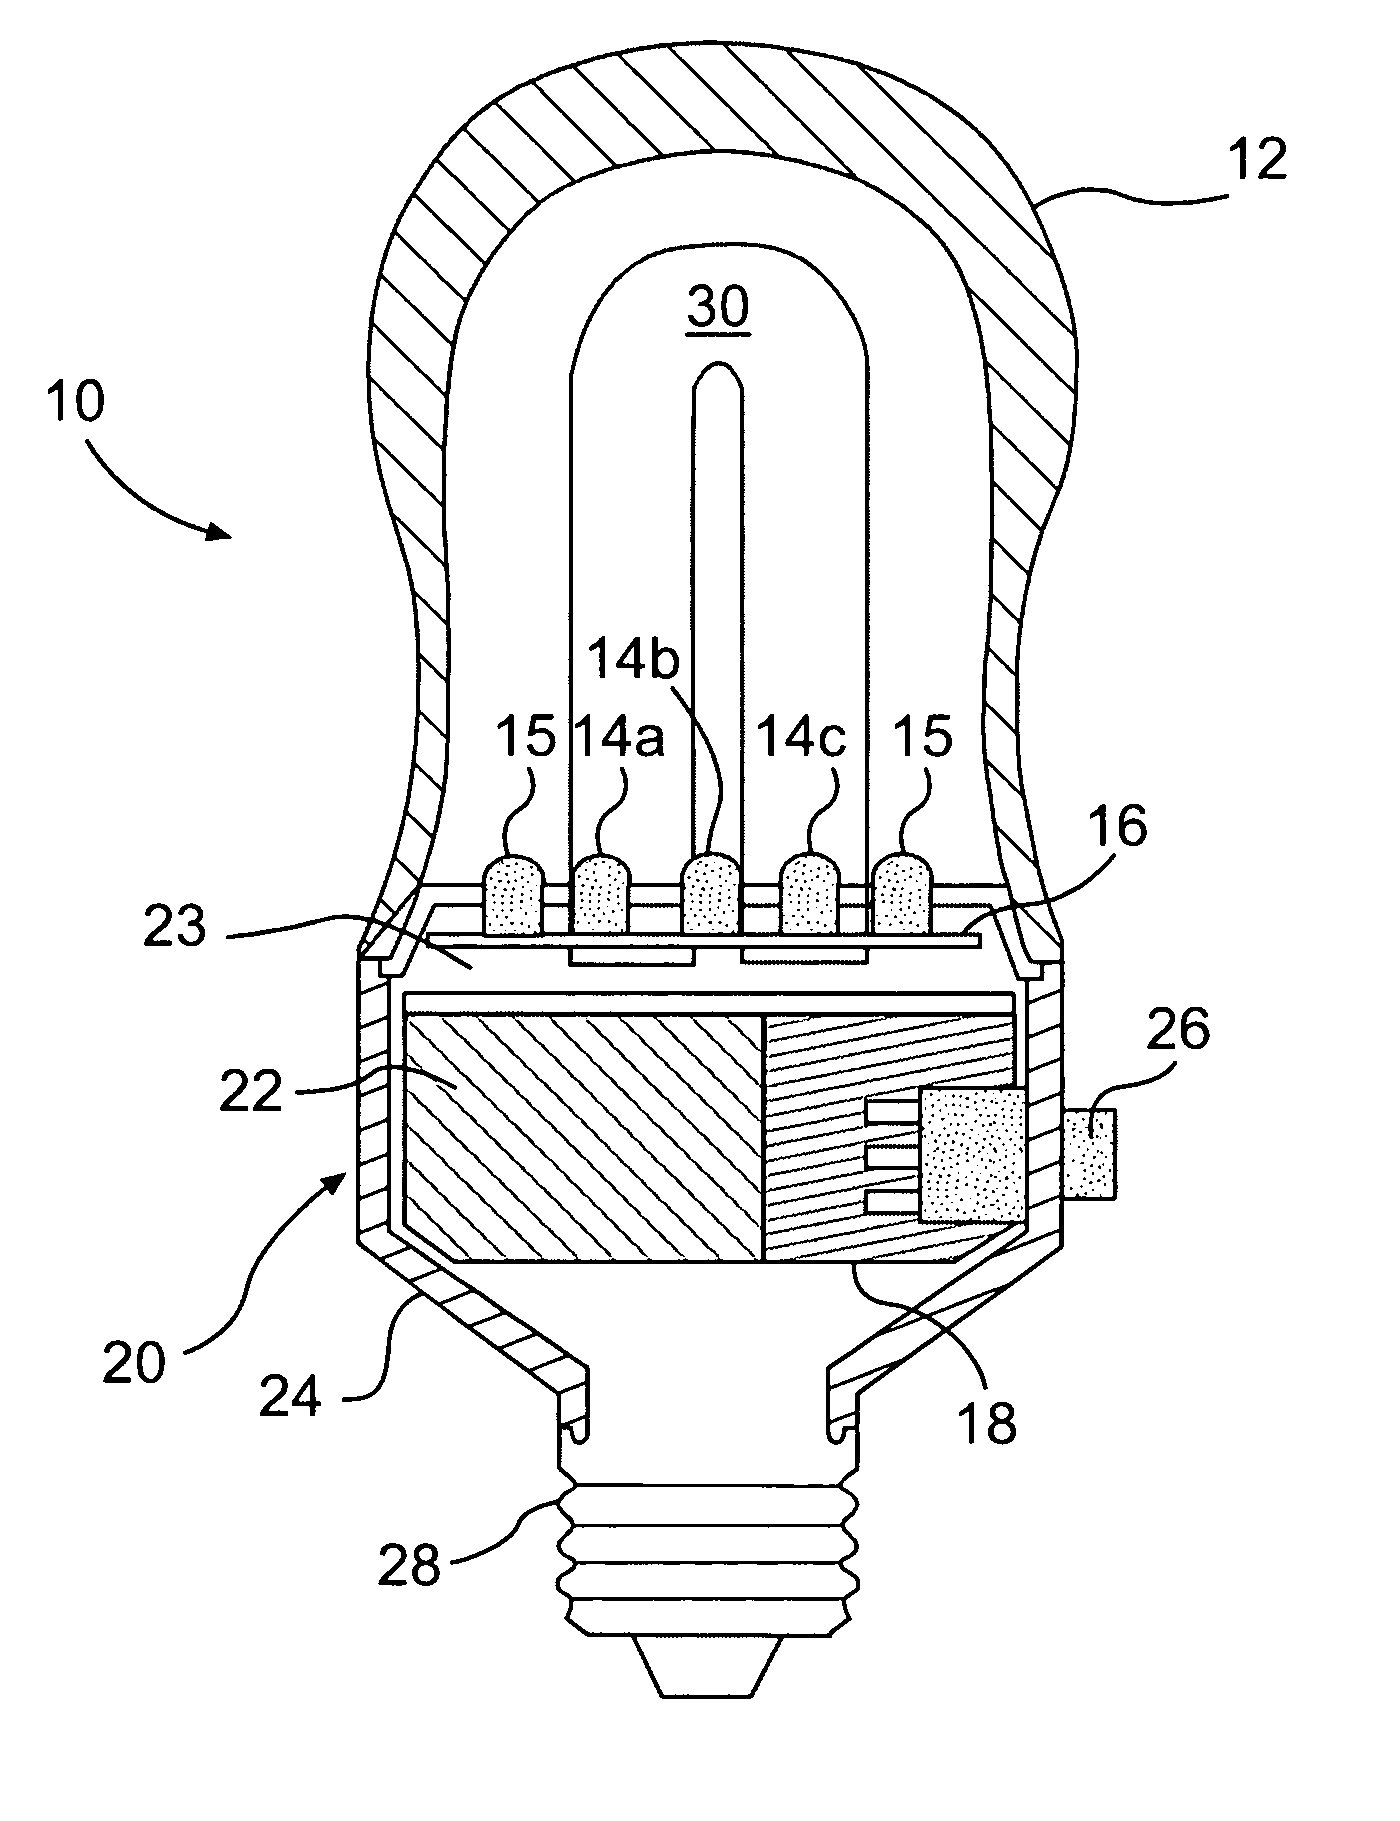 Led light bulb with active ingredient emission